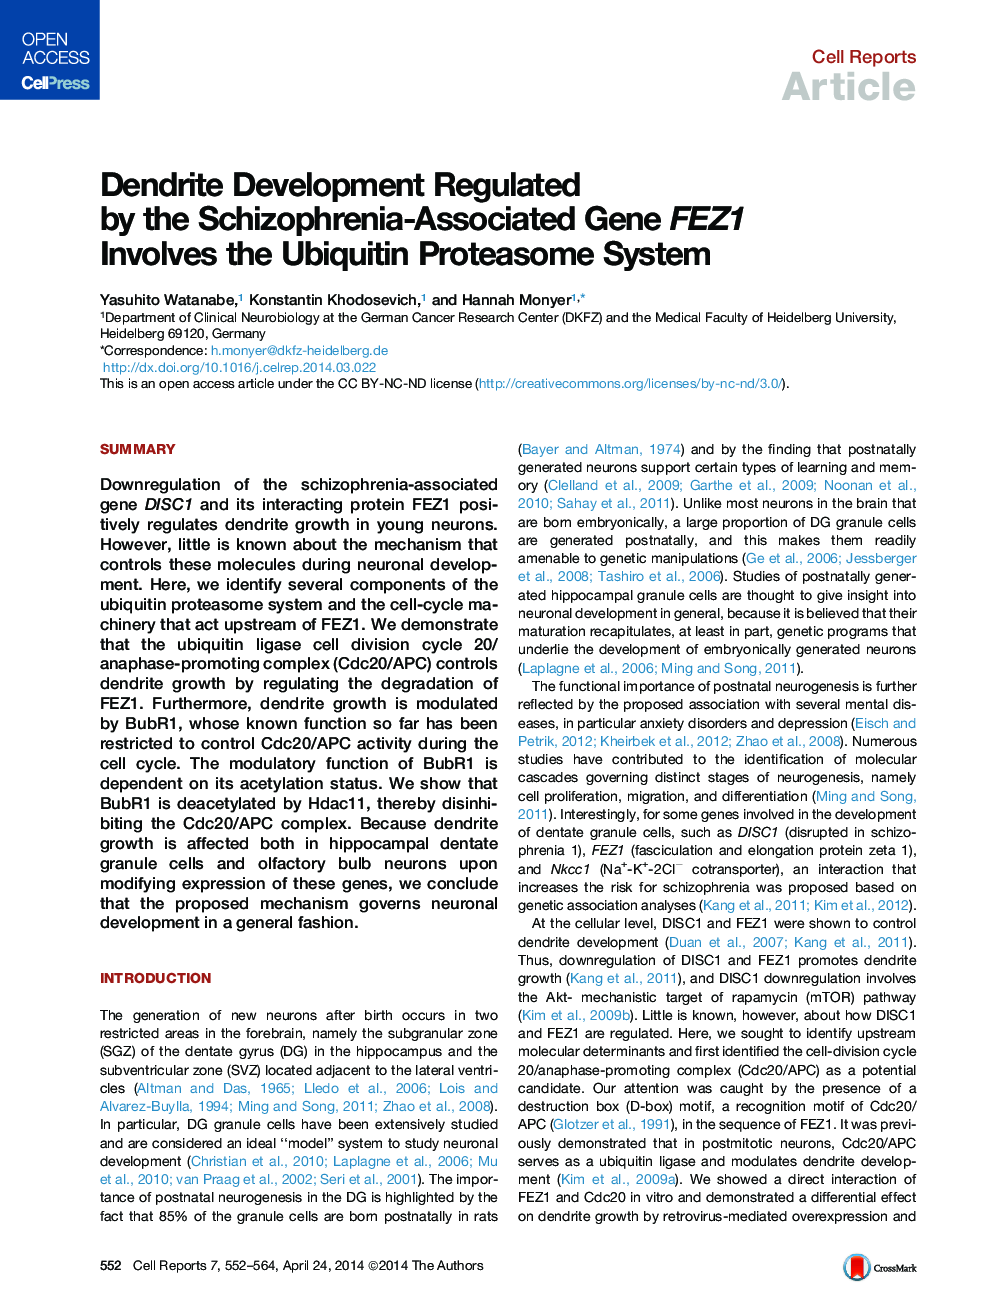 Dendrite Development Regulated by the Schizophrenia-Associated Gene FEZ1 Involves the Ubiquitin Proteasome System 